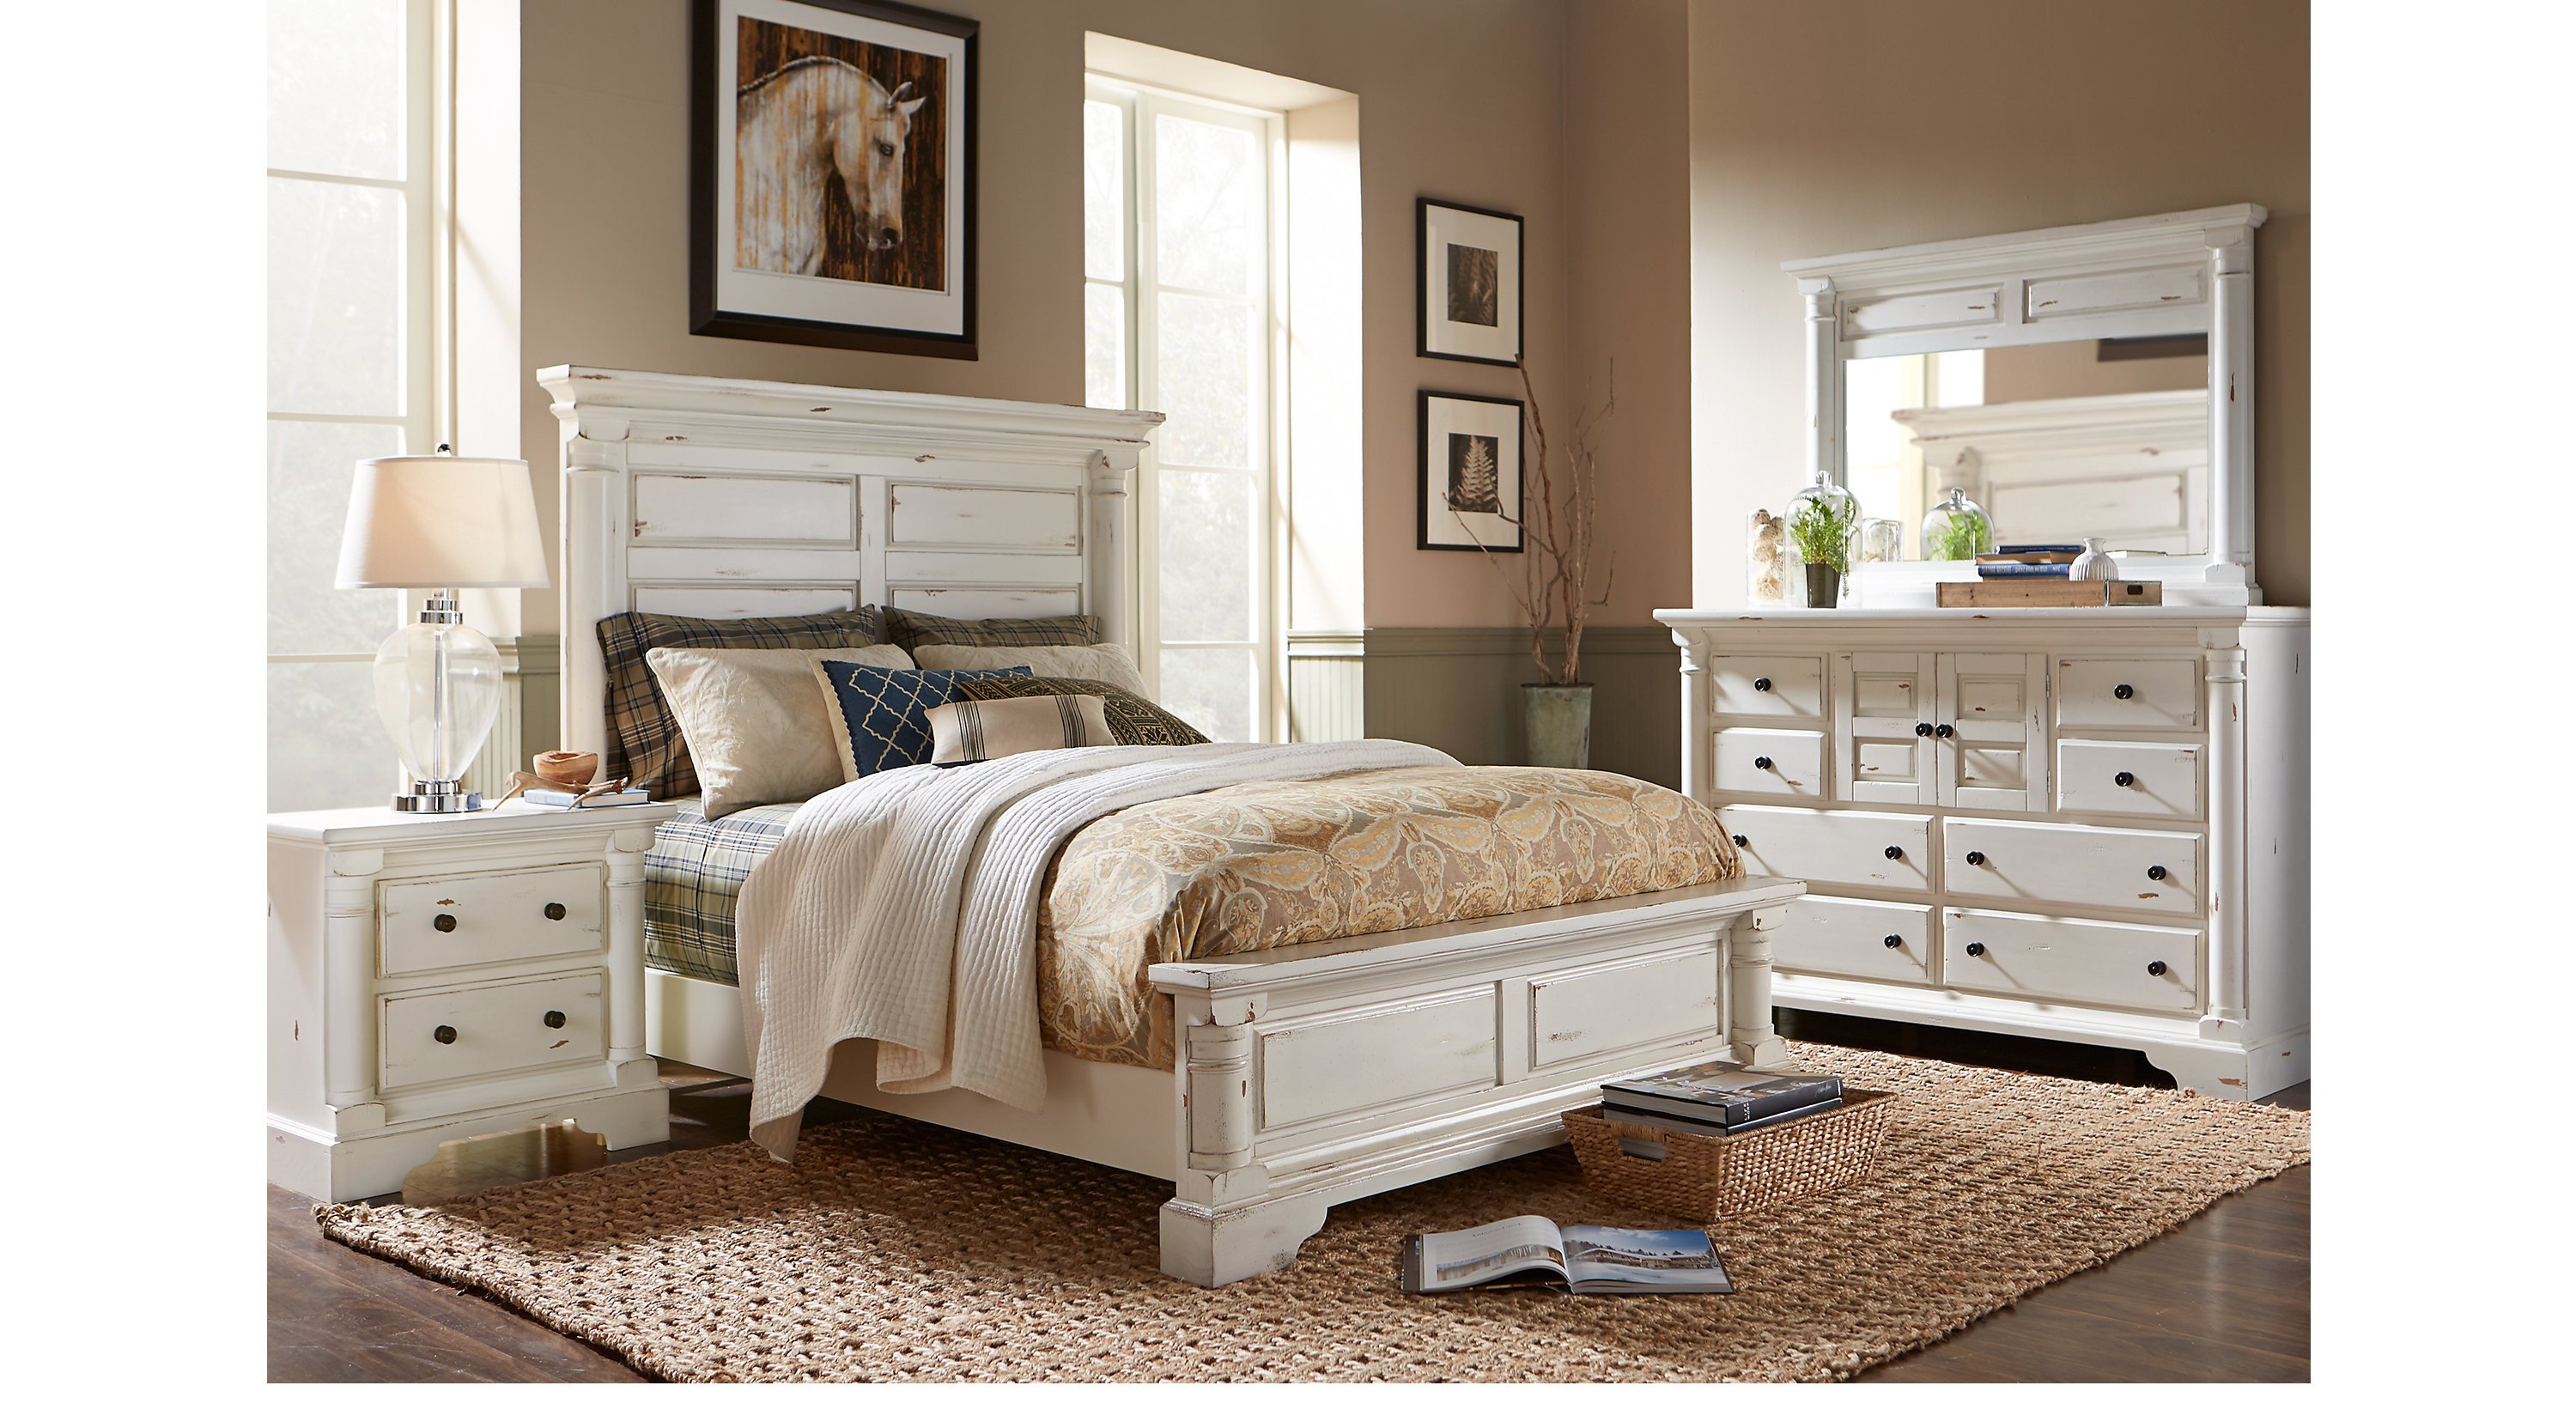 Small Bedroom King Bed Unique Bestpriceshooversteamvacreplacementp Luxury Bed Back Wall